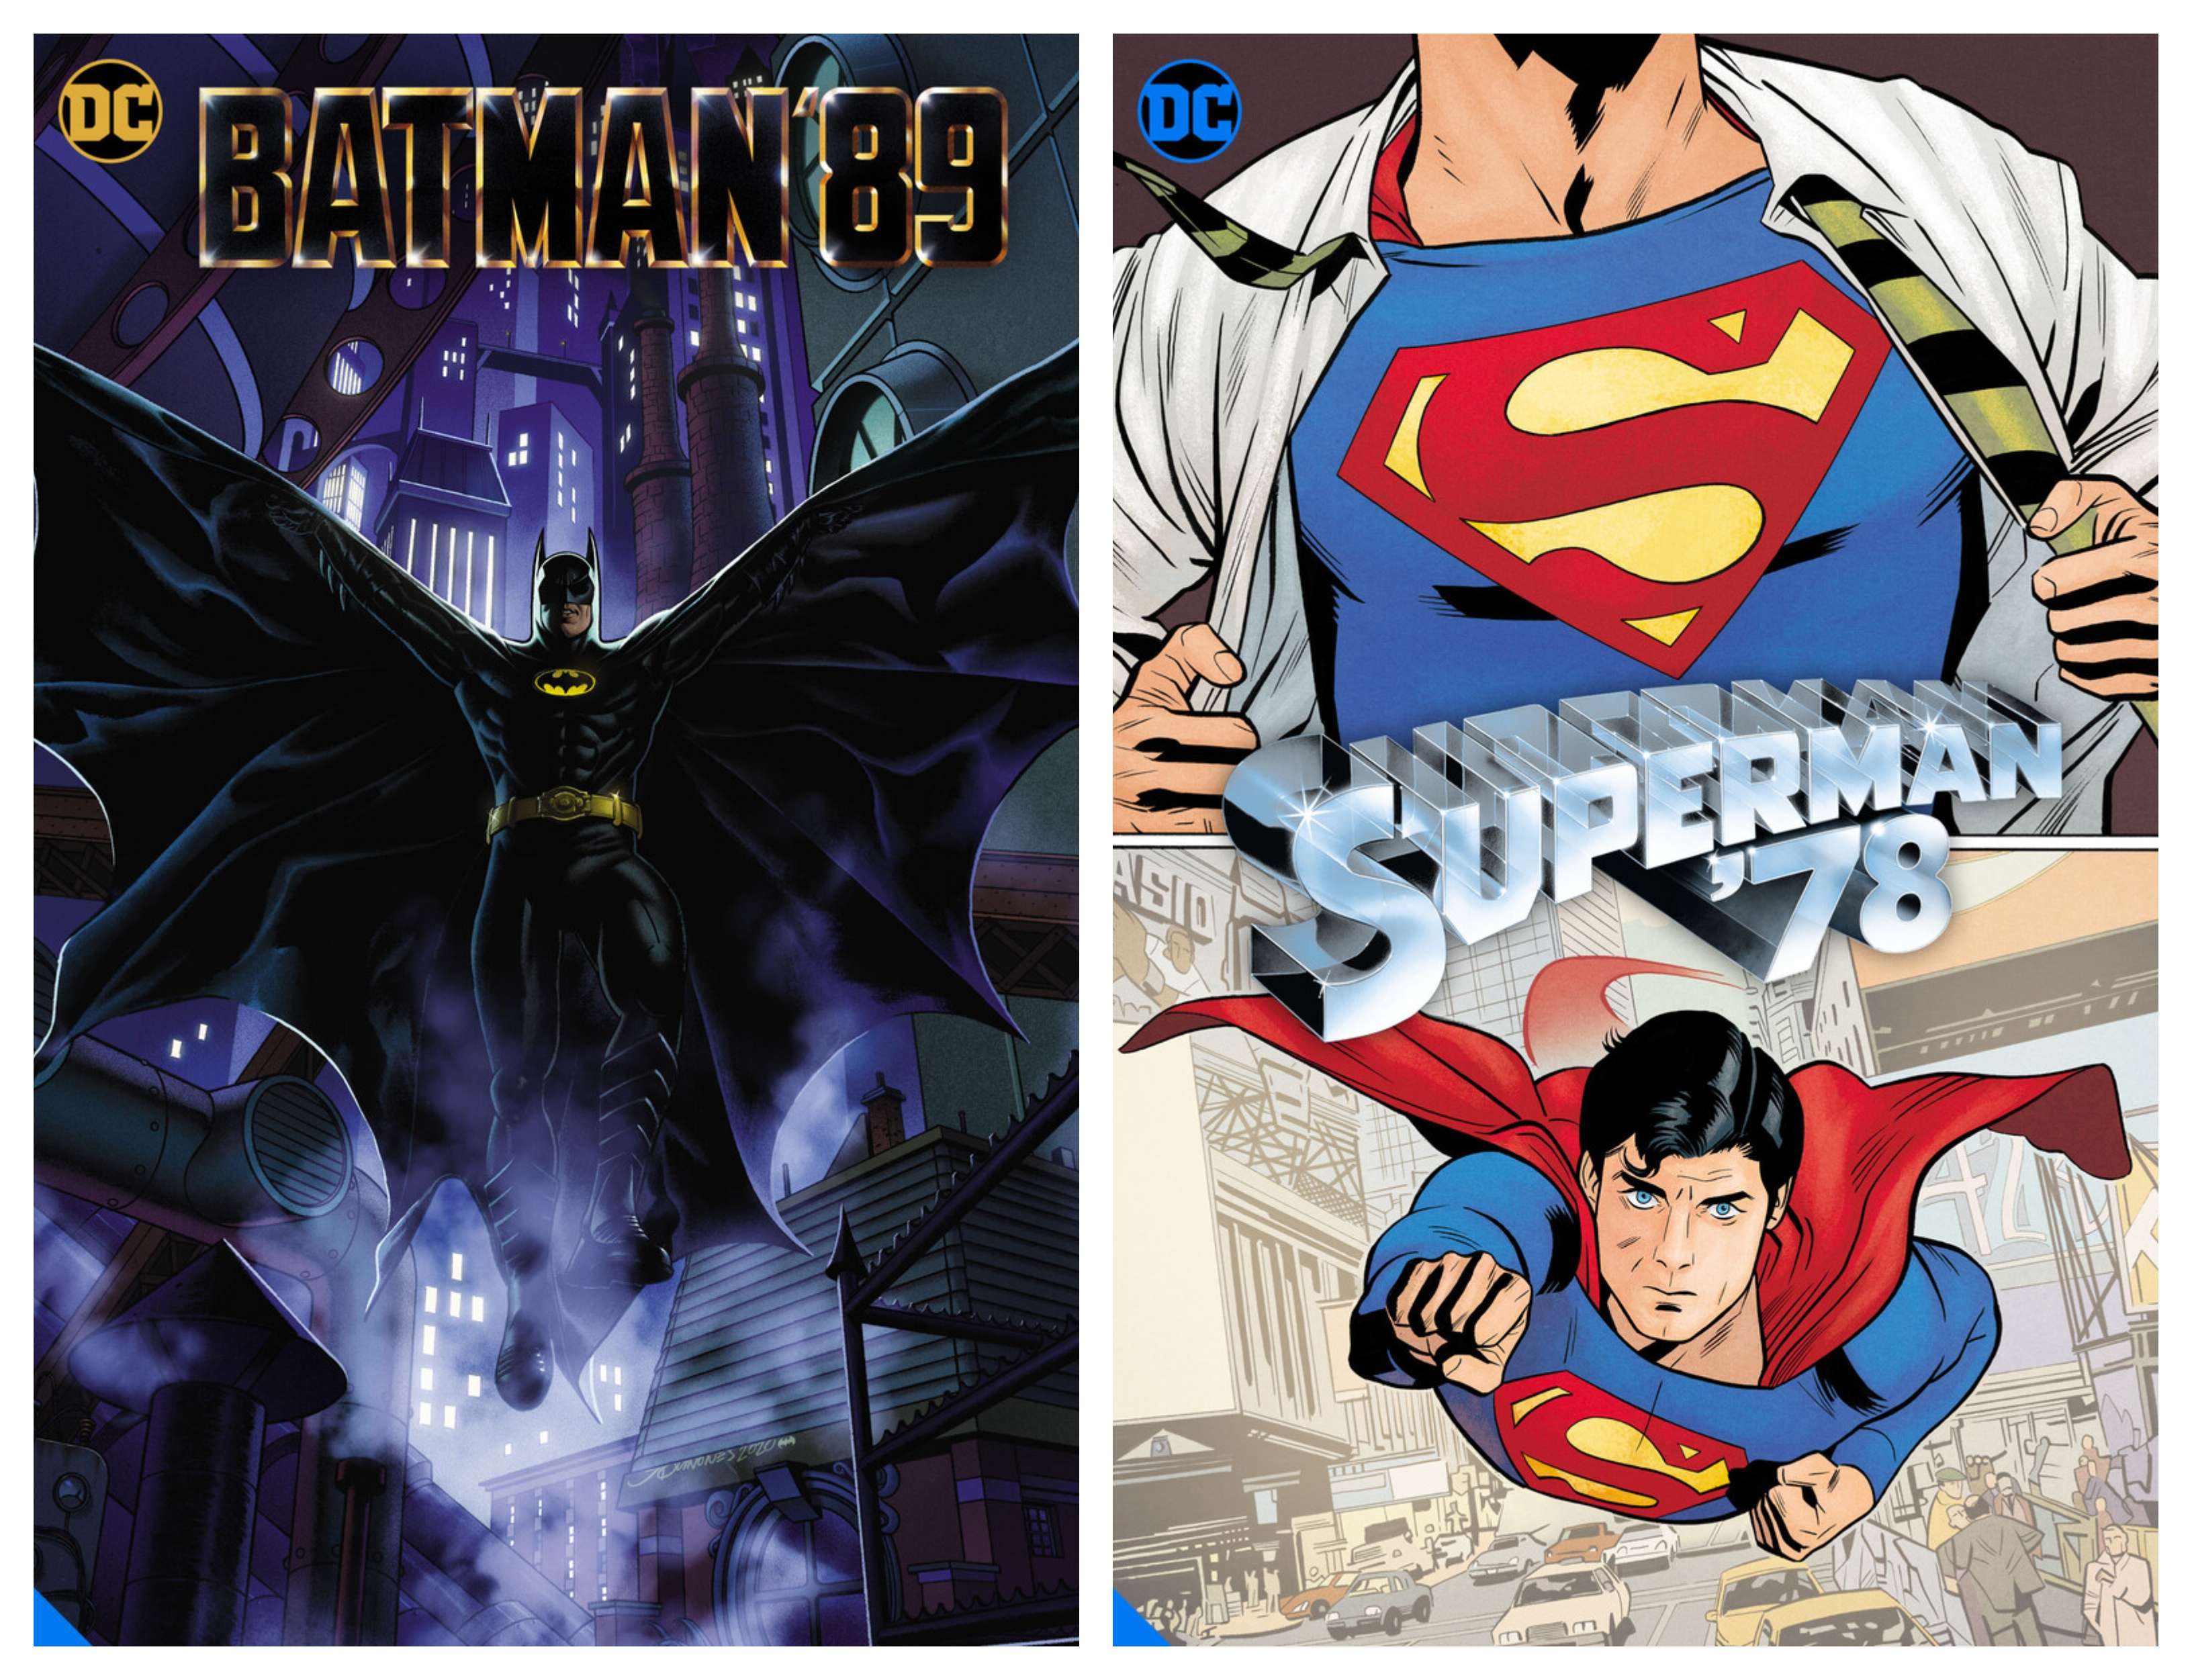 Batman '89 and Supermn '78 comic book covers